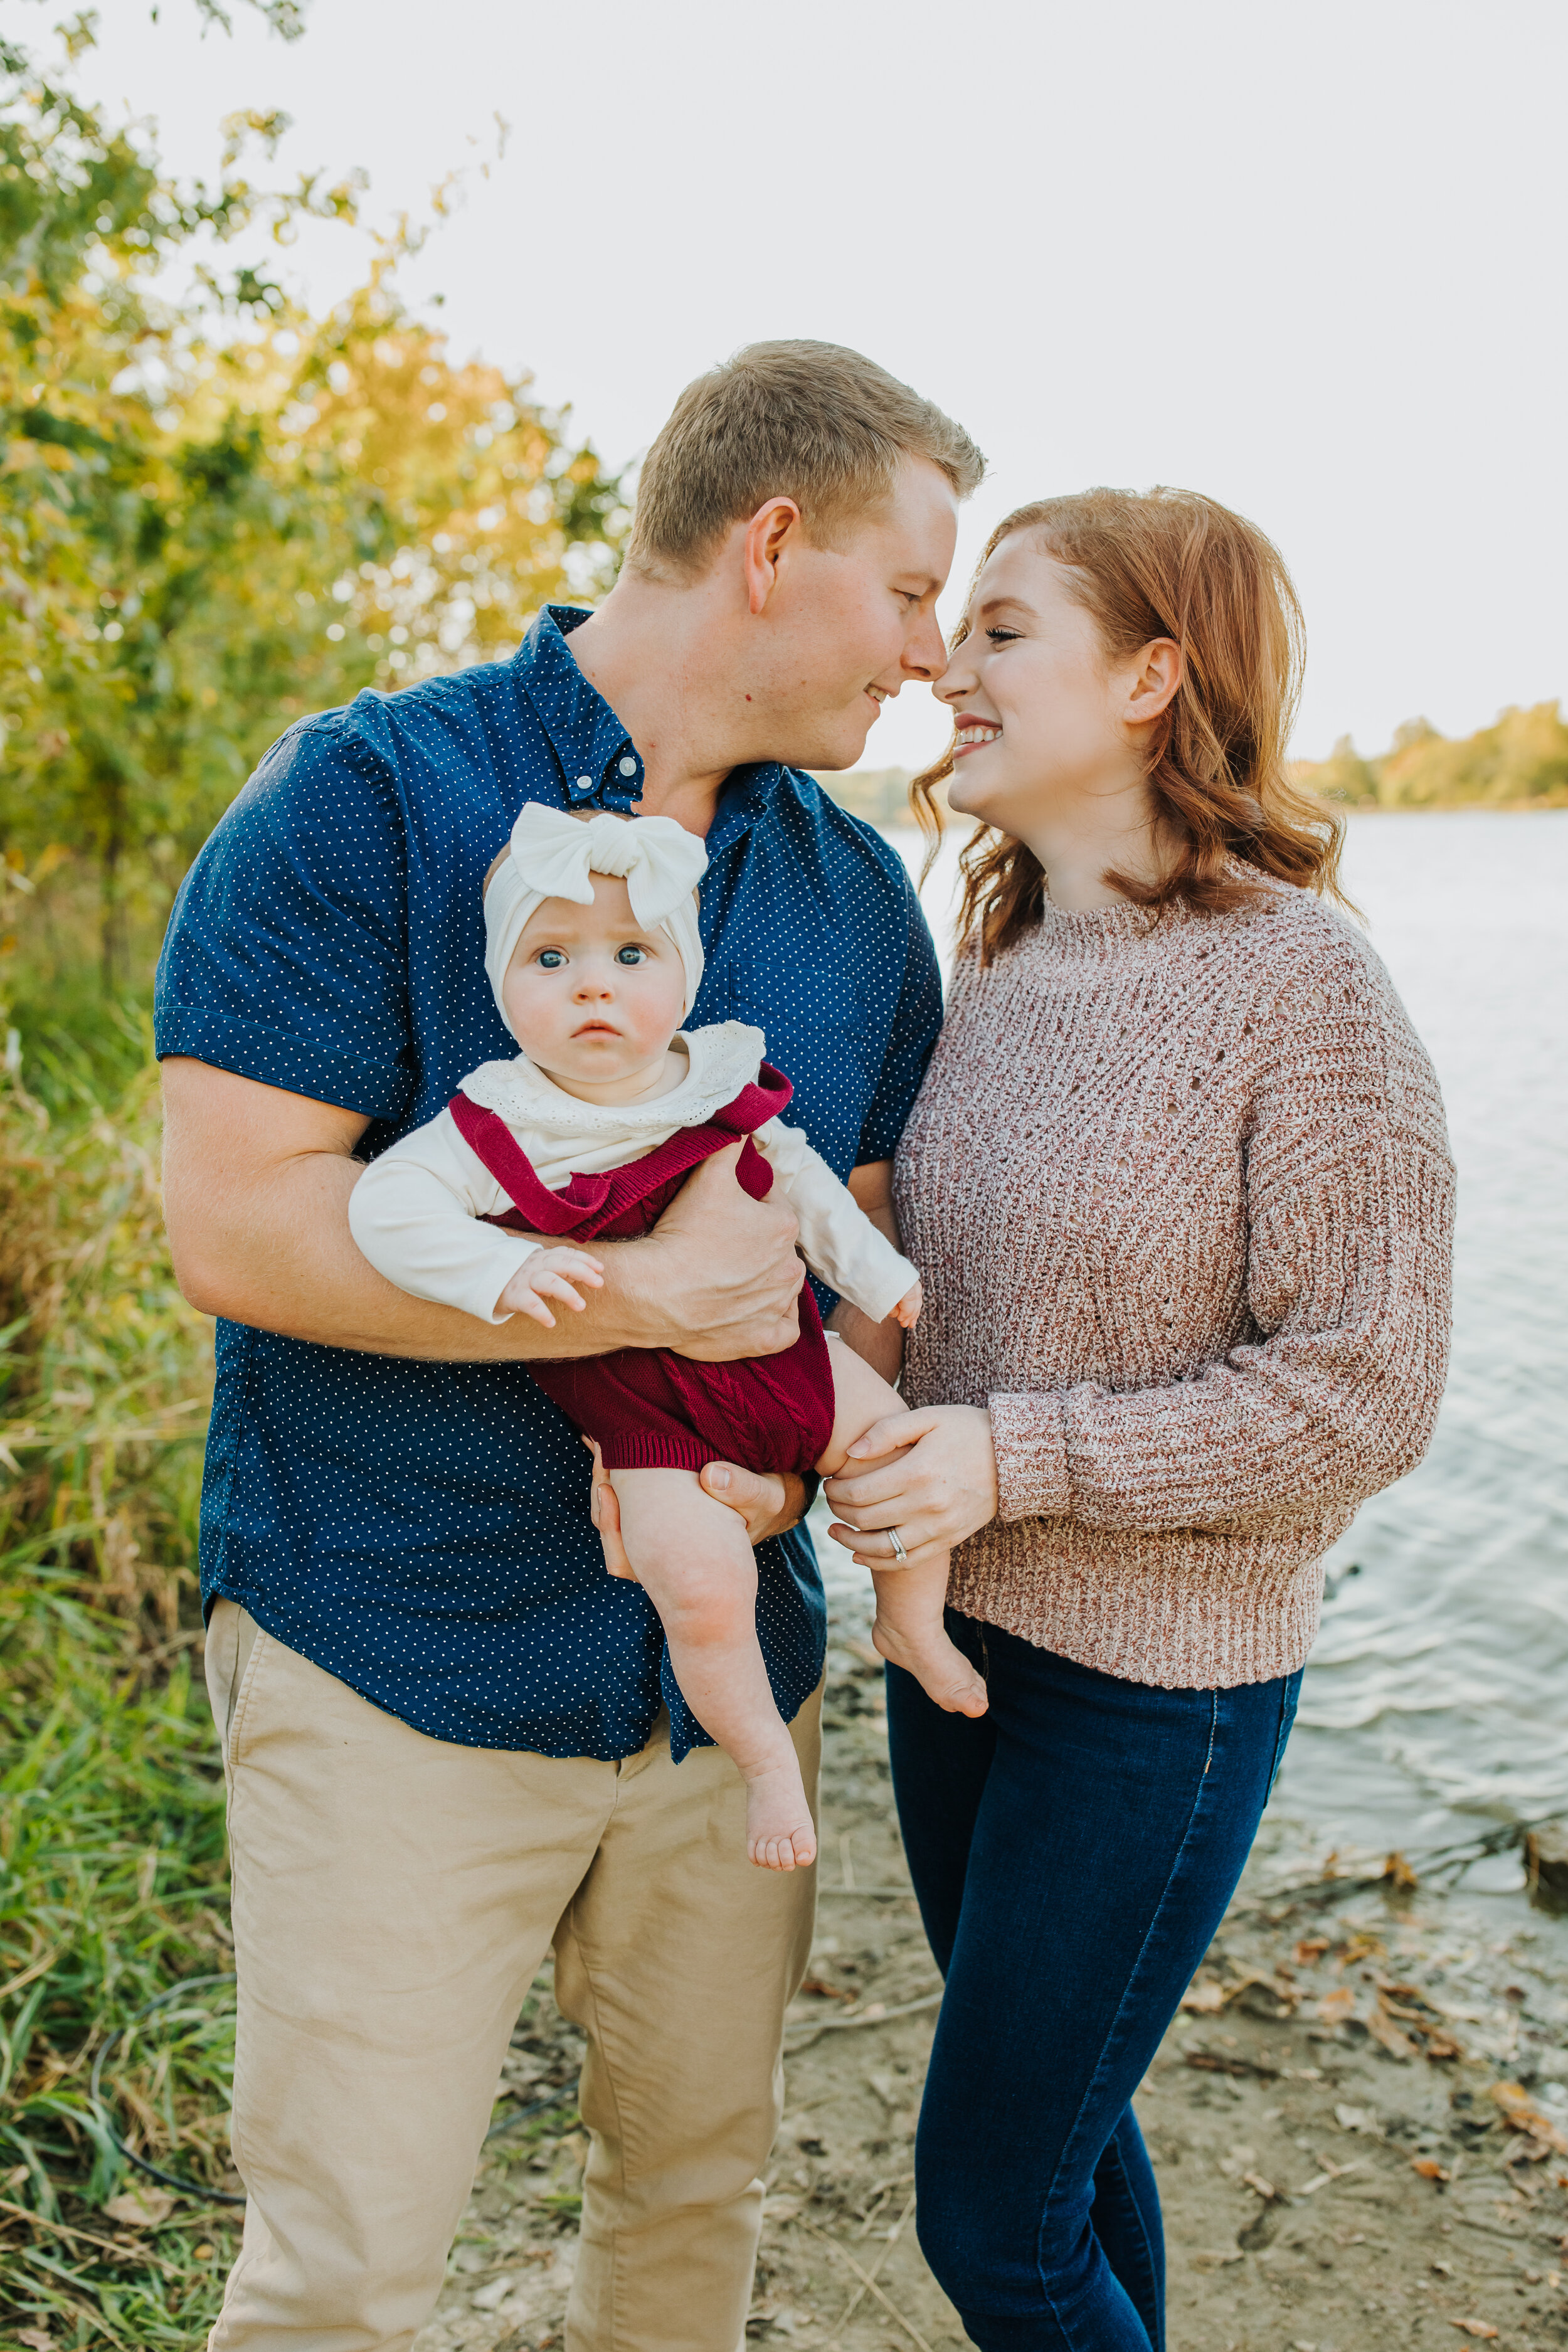 Unger Family Photos 2020 - Nathaniel Jensen Photography - Omaha Nebraska Family Photographer-10.jpg